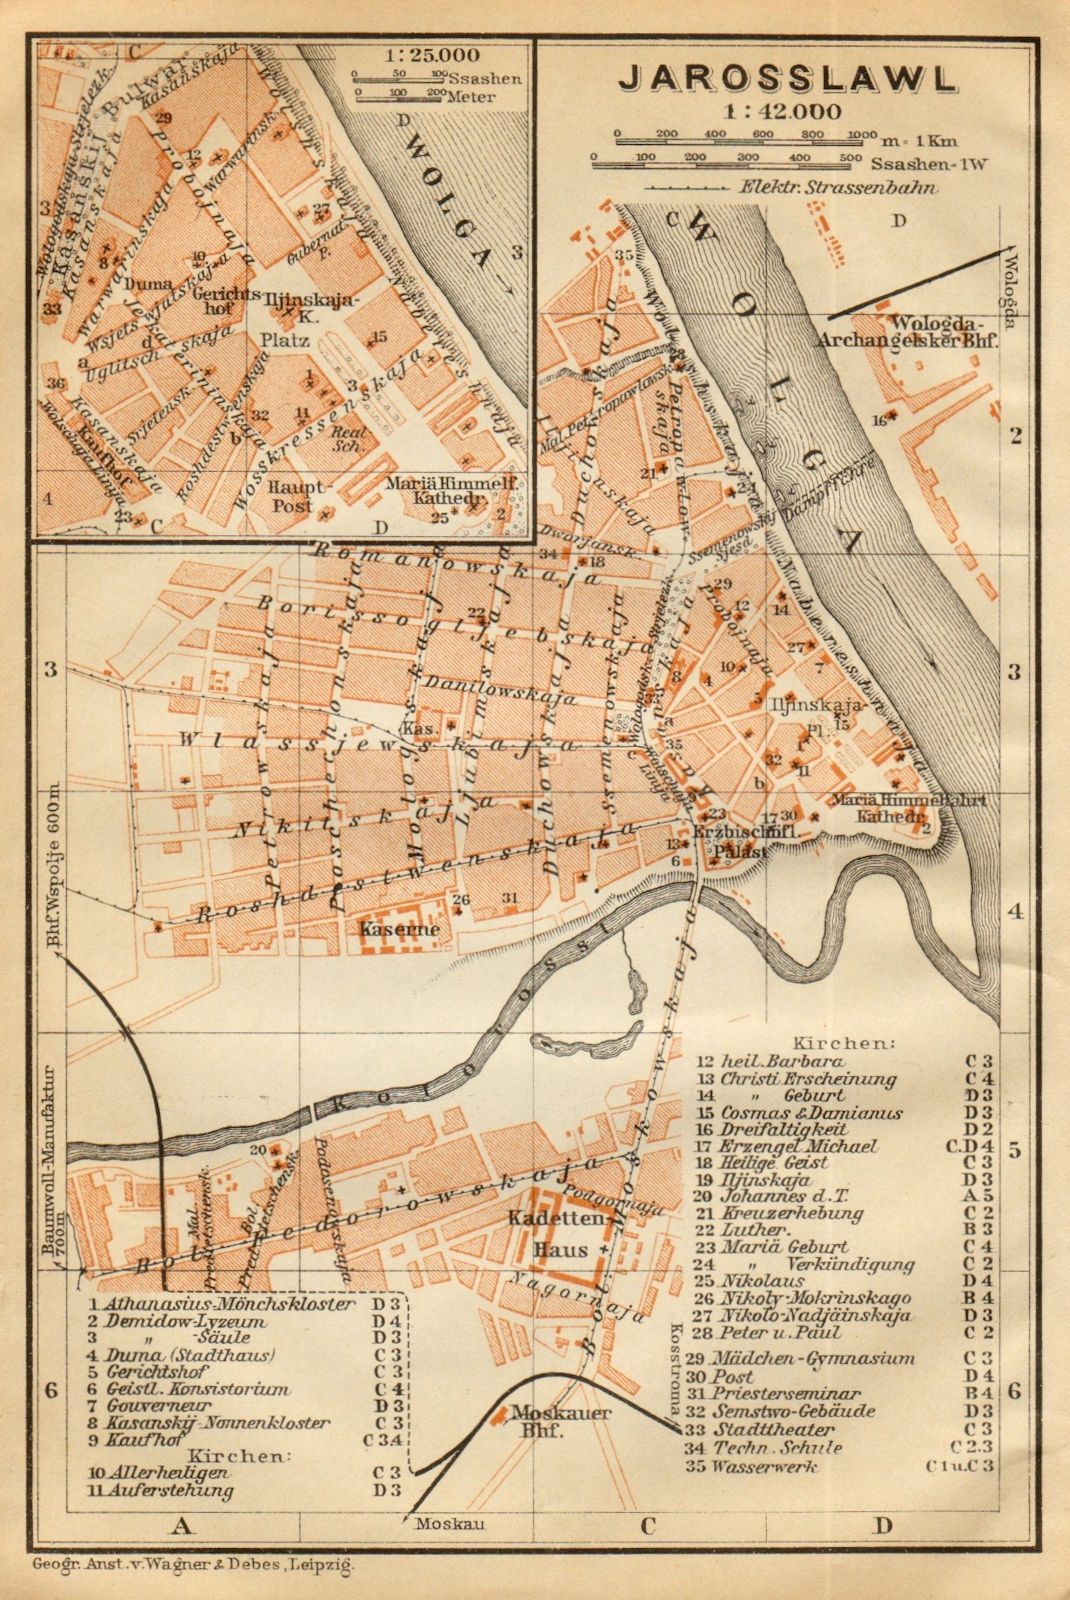 Yaroslavl town/city plan. Russia. Jarosslawl. BAEDEKER 1912 old antique map